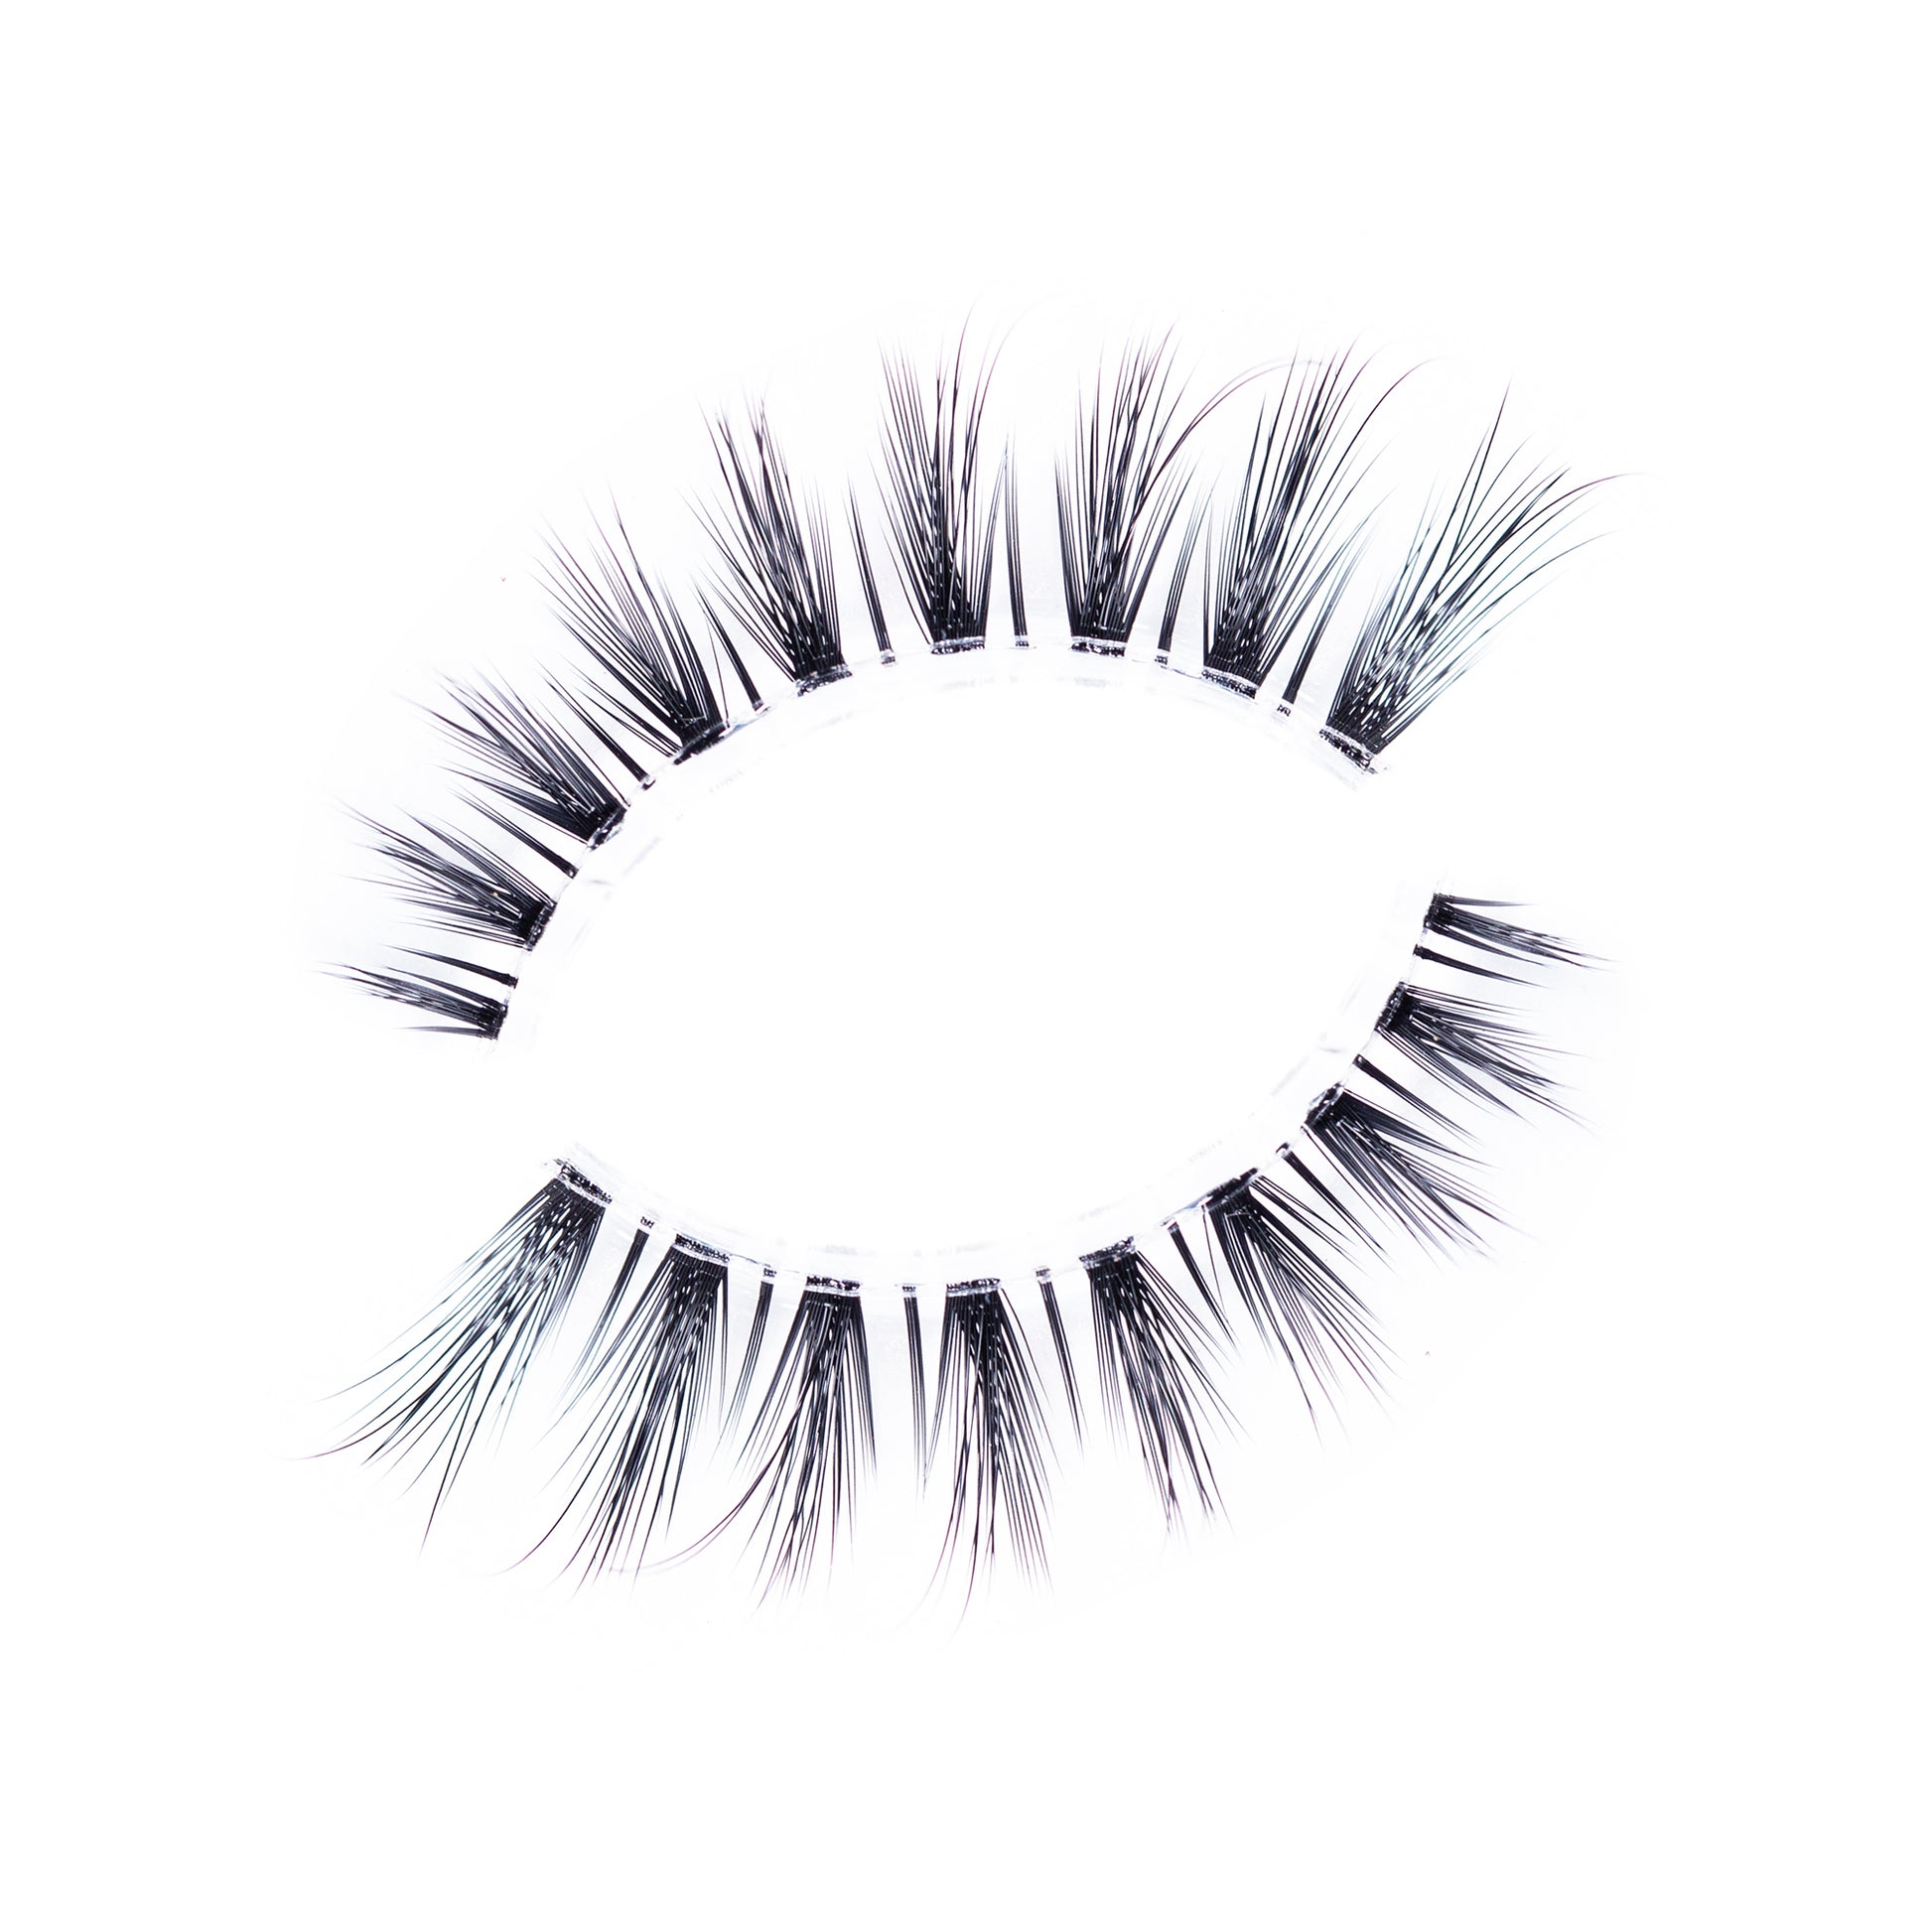 Lunas Eyelash - Rokael Beauty